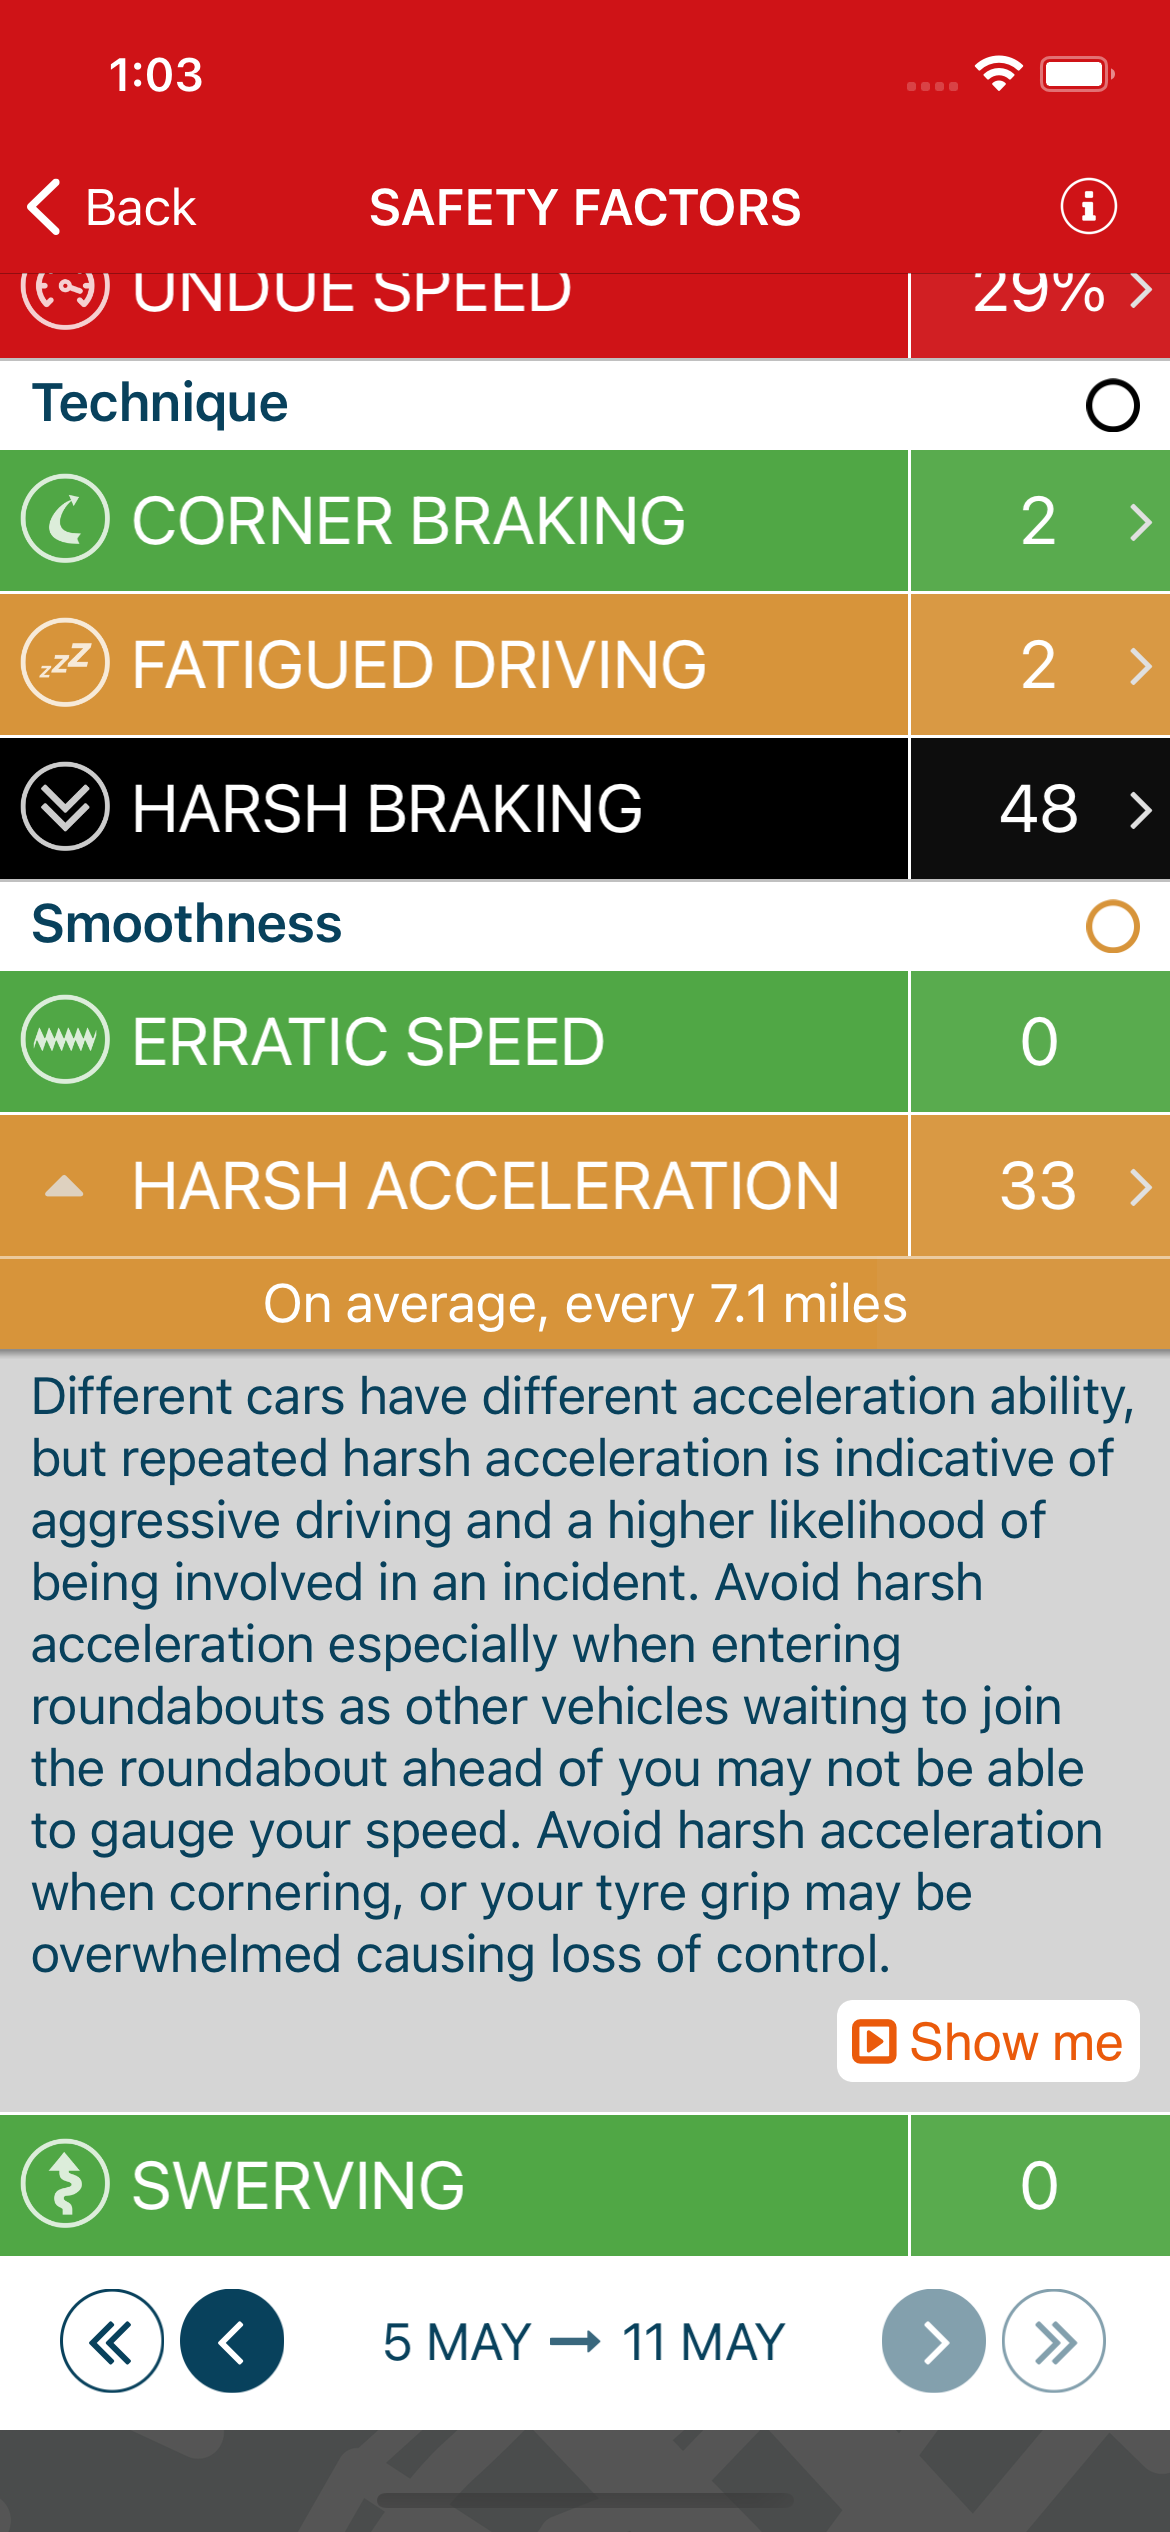 redtail-driver-scoring-harsh-acceleration-hotspots